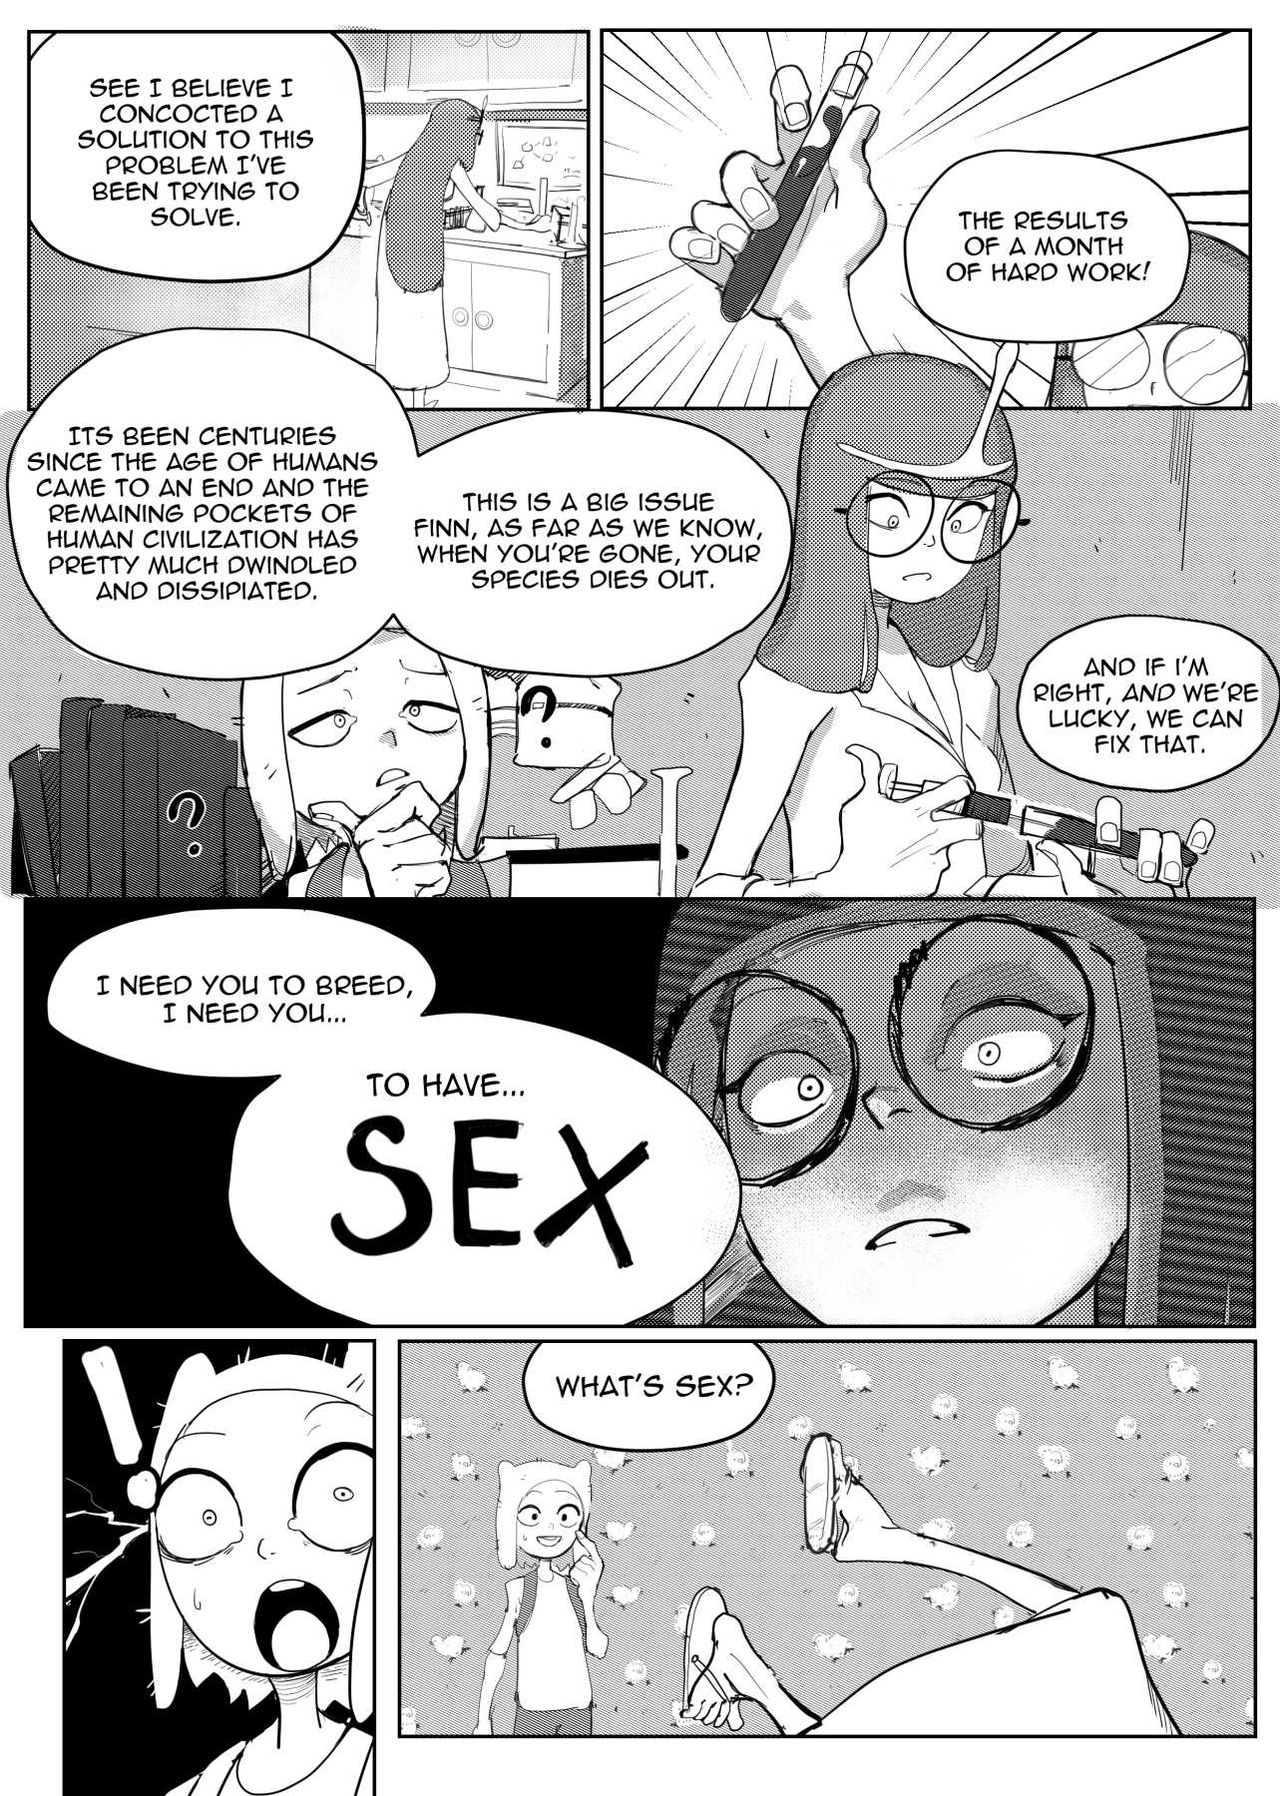 Finn Adventure Time Sex Porn - Reproduction Time 1 (adventure time) â€¢ Free Porn Comics